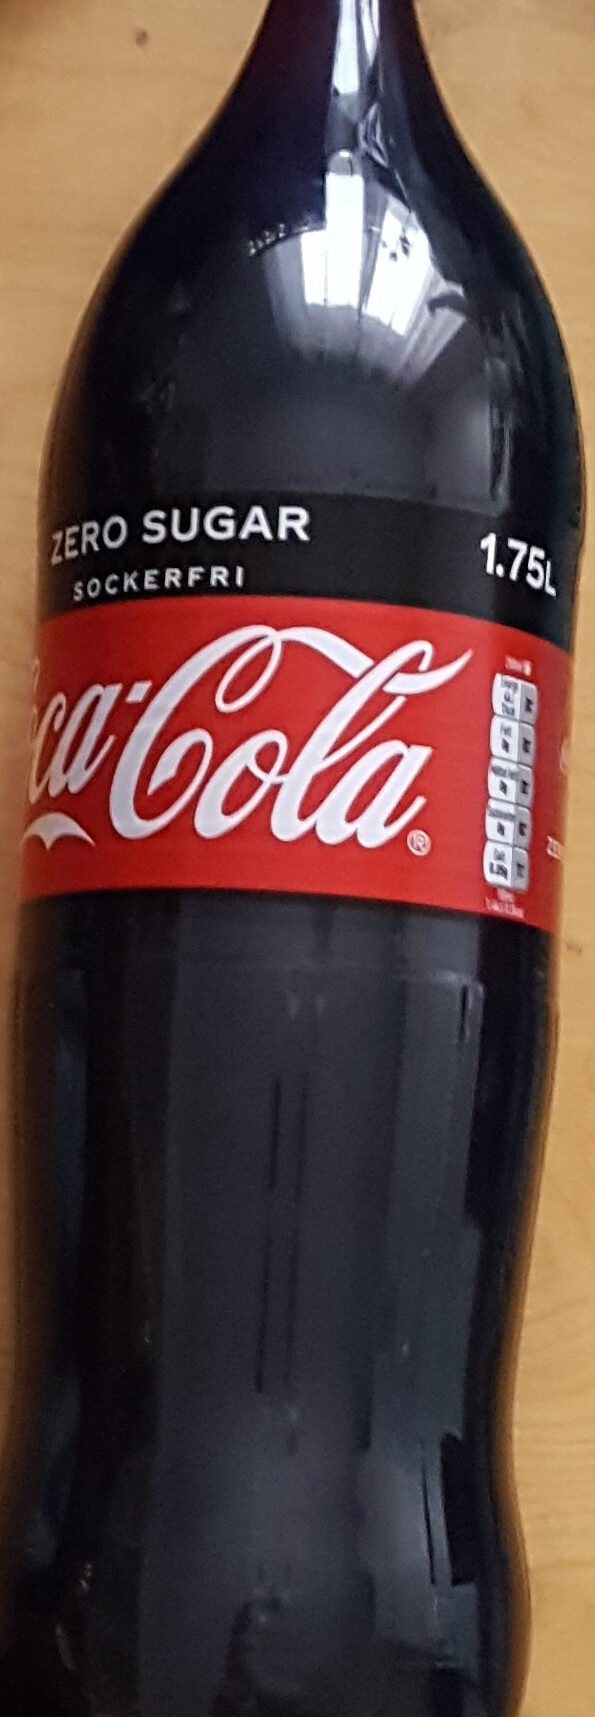 Coca-Cola Zero Sugar - Sockerfri - Produkt